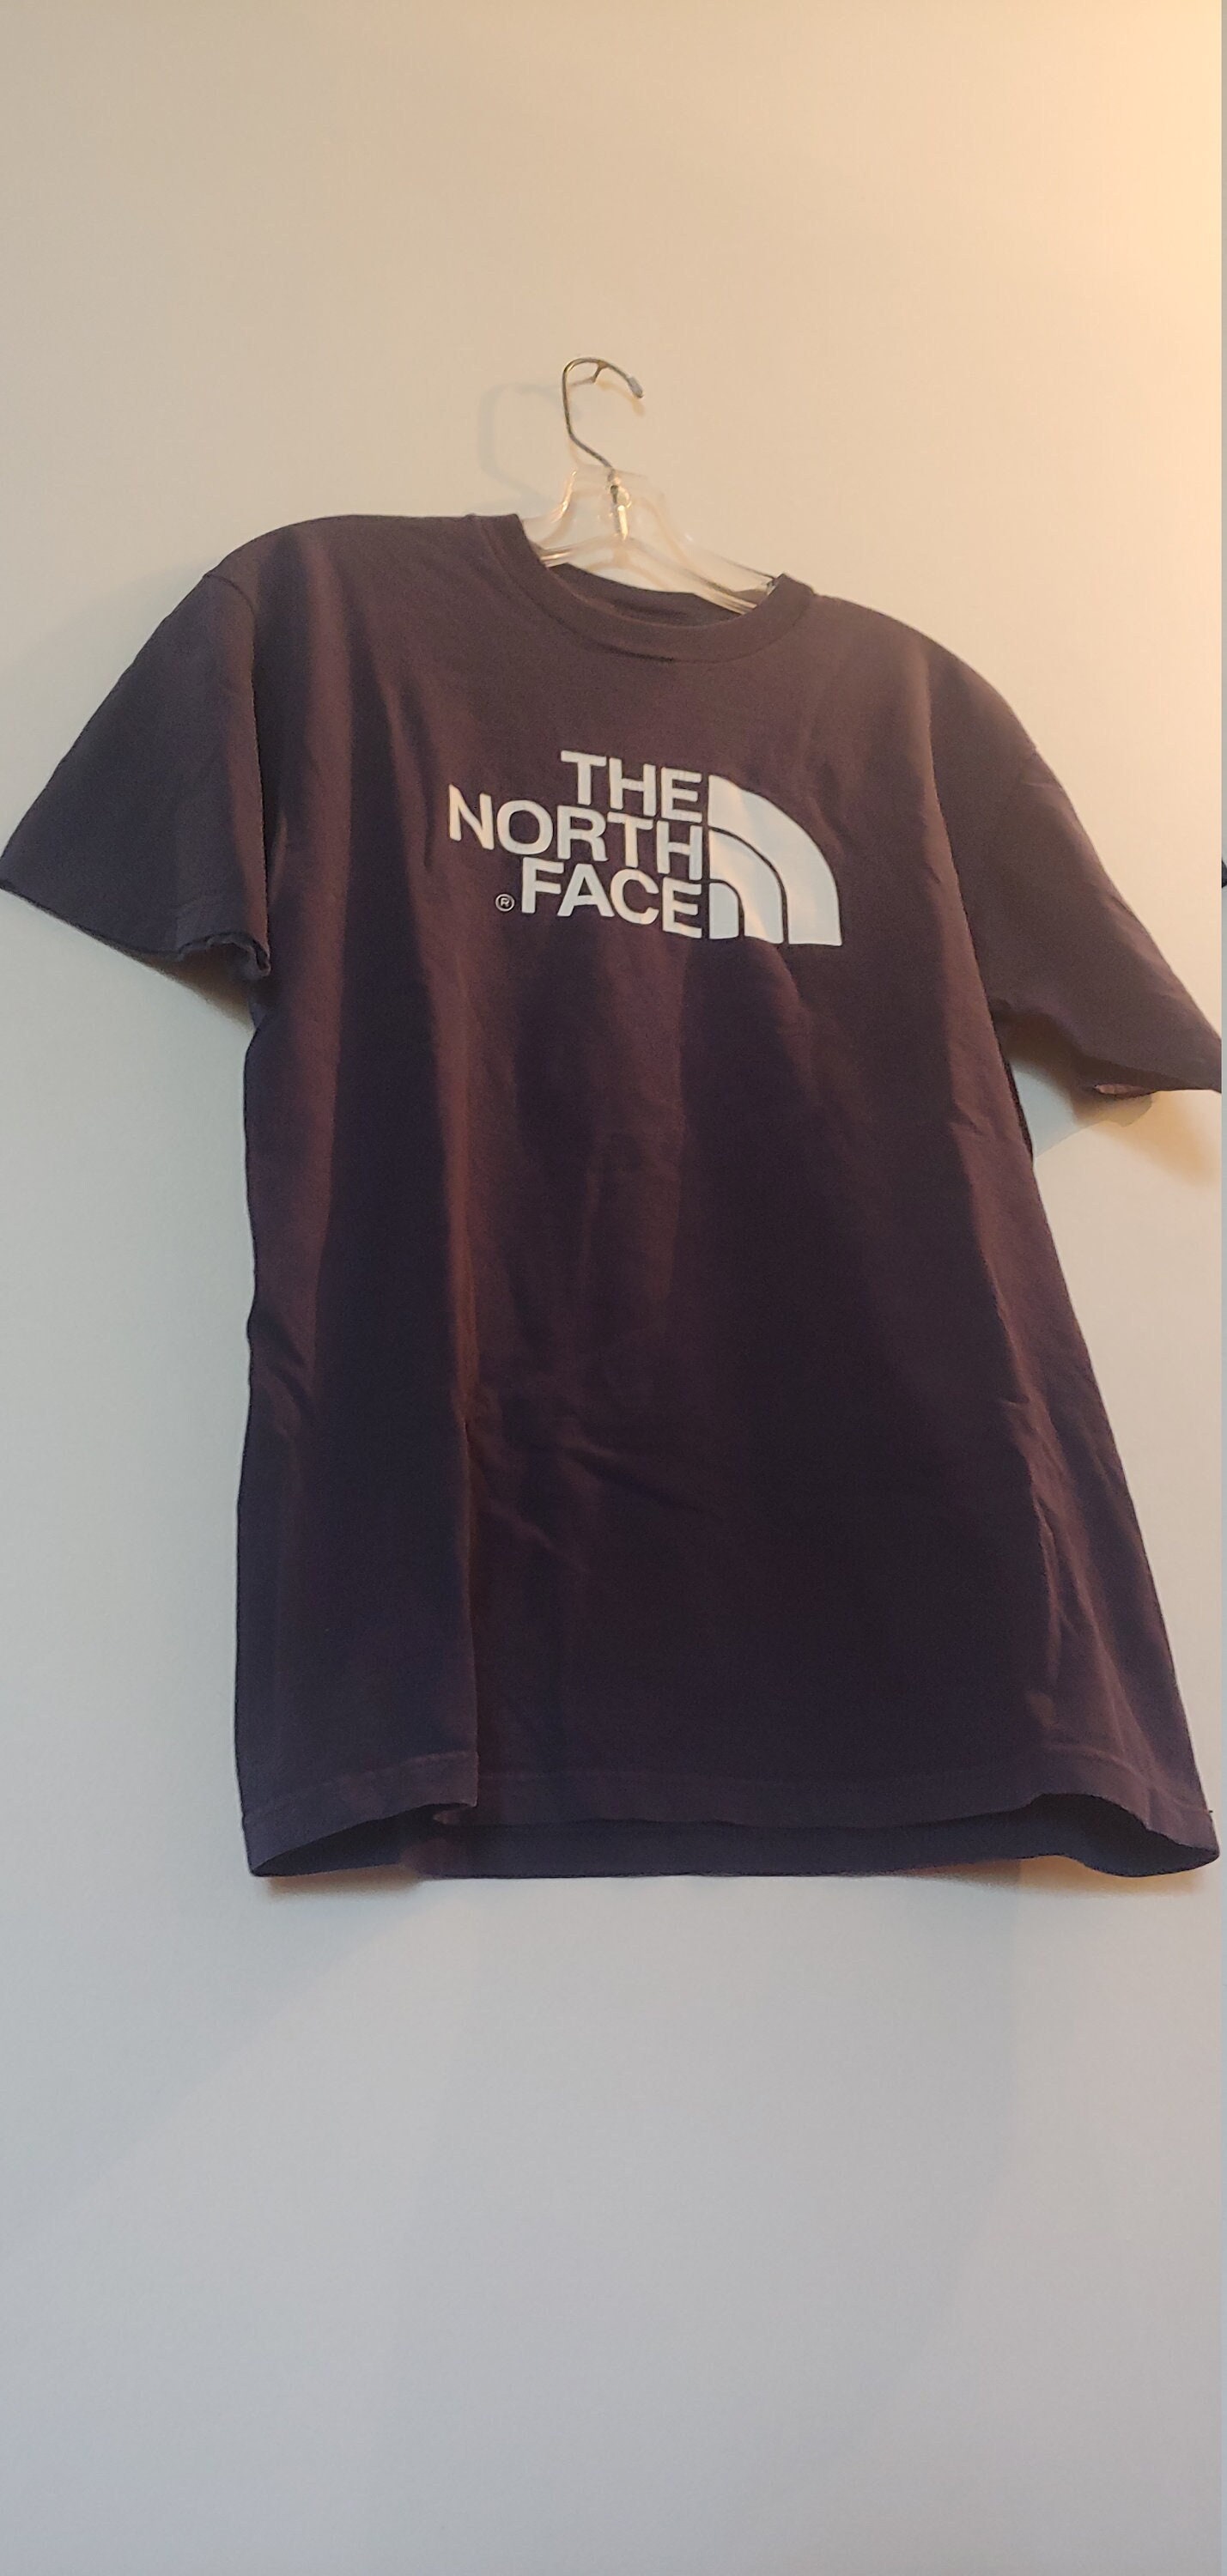 The North Face Shirt - Etsy